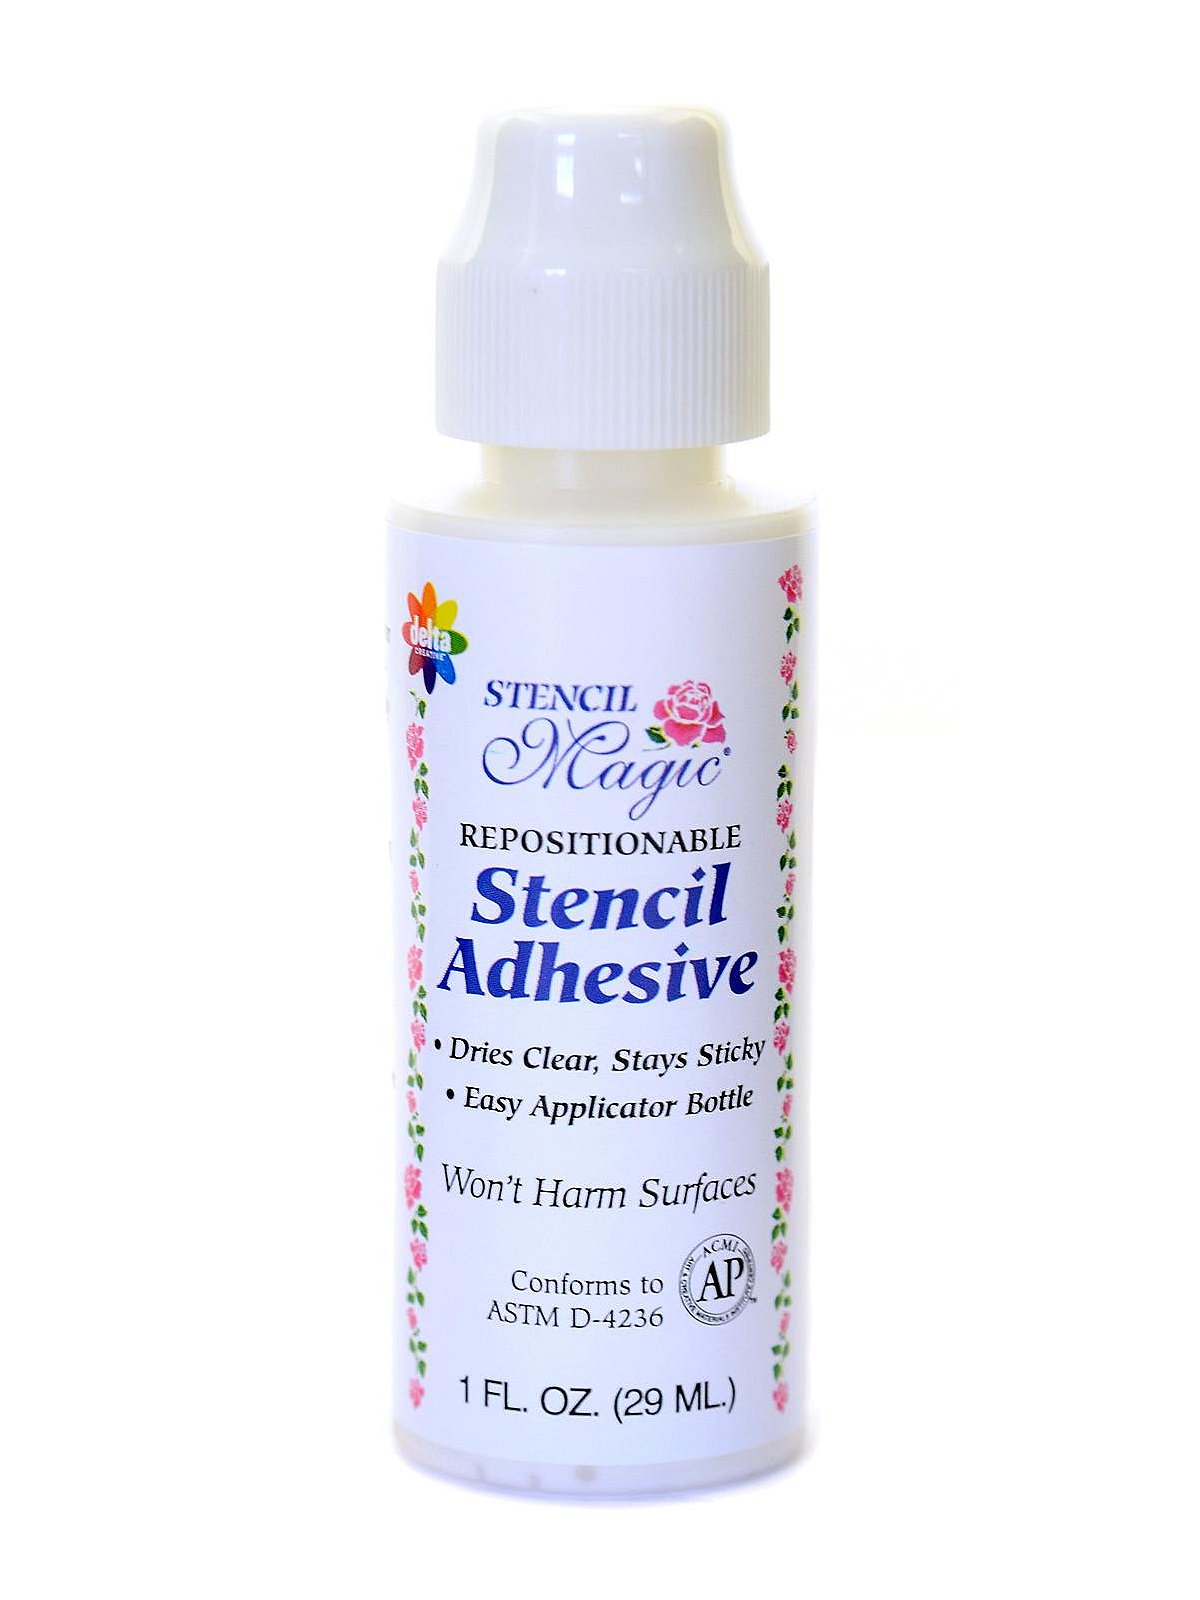 (2) repositionable Stencil adhesive spray restick glue 1oz bottle